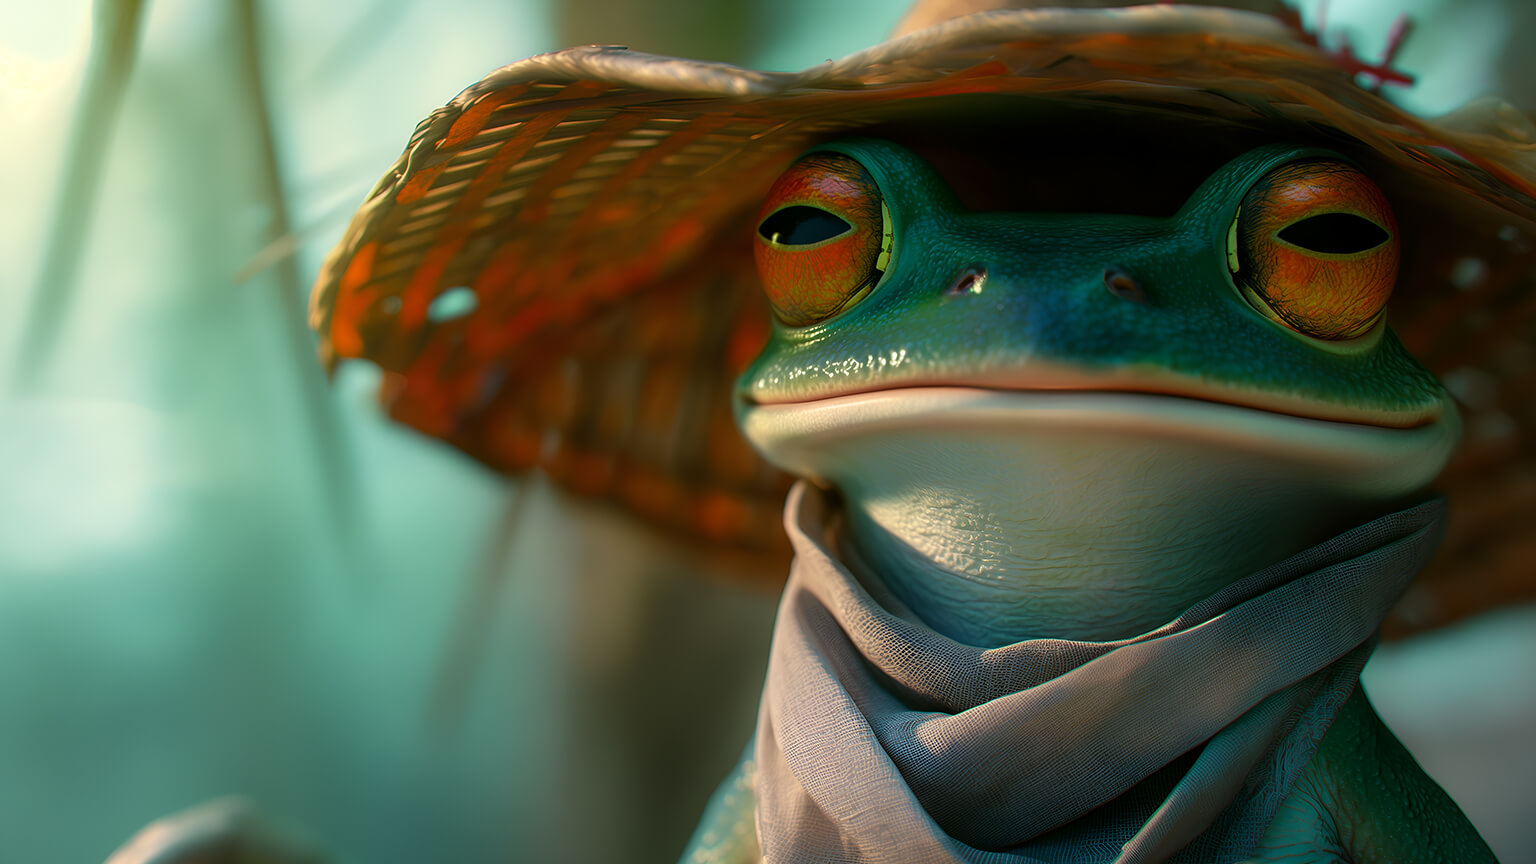 Realistic Frog in Hat Desktop Wallpaper - Free Frog Wallpaper in 4K